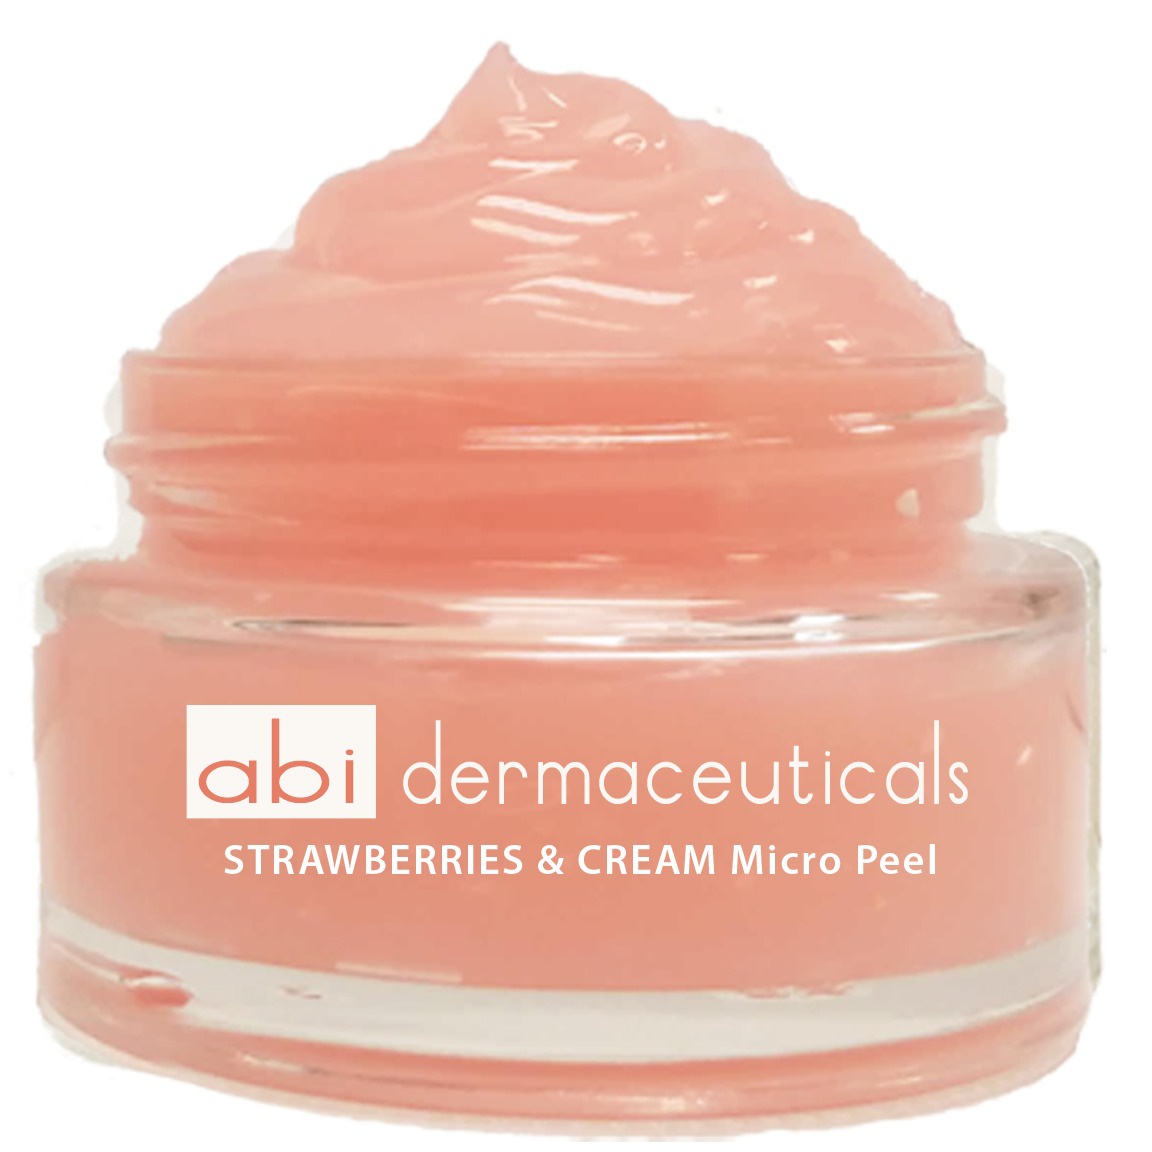 abi dermaceuticals Strawberry And Cream Micro Peel